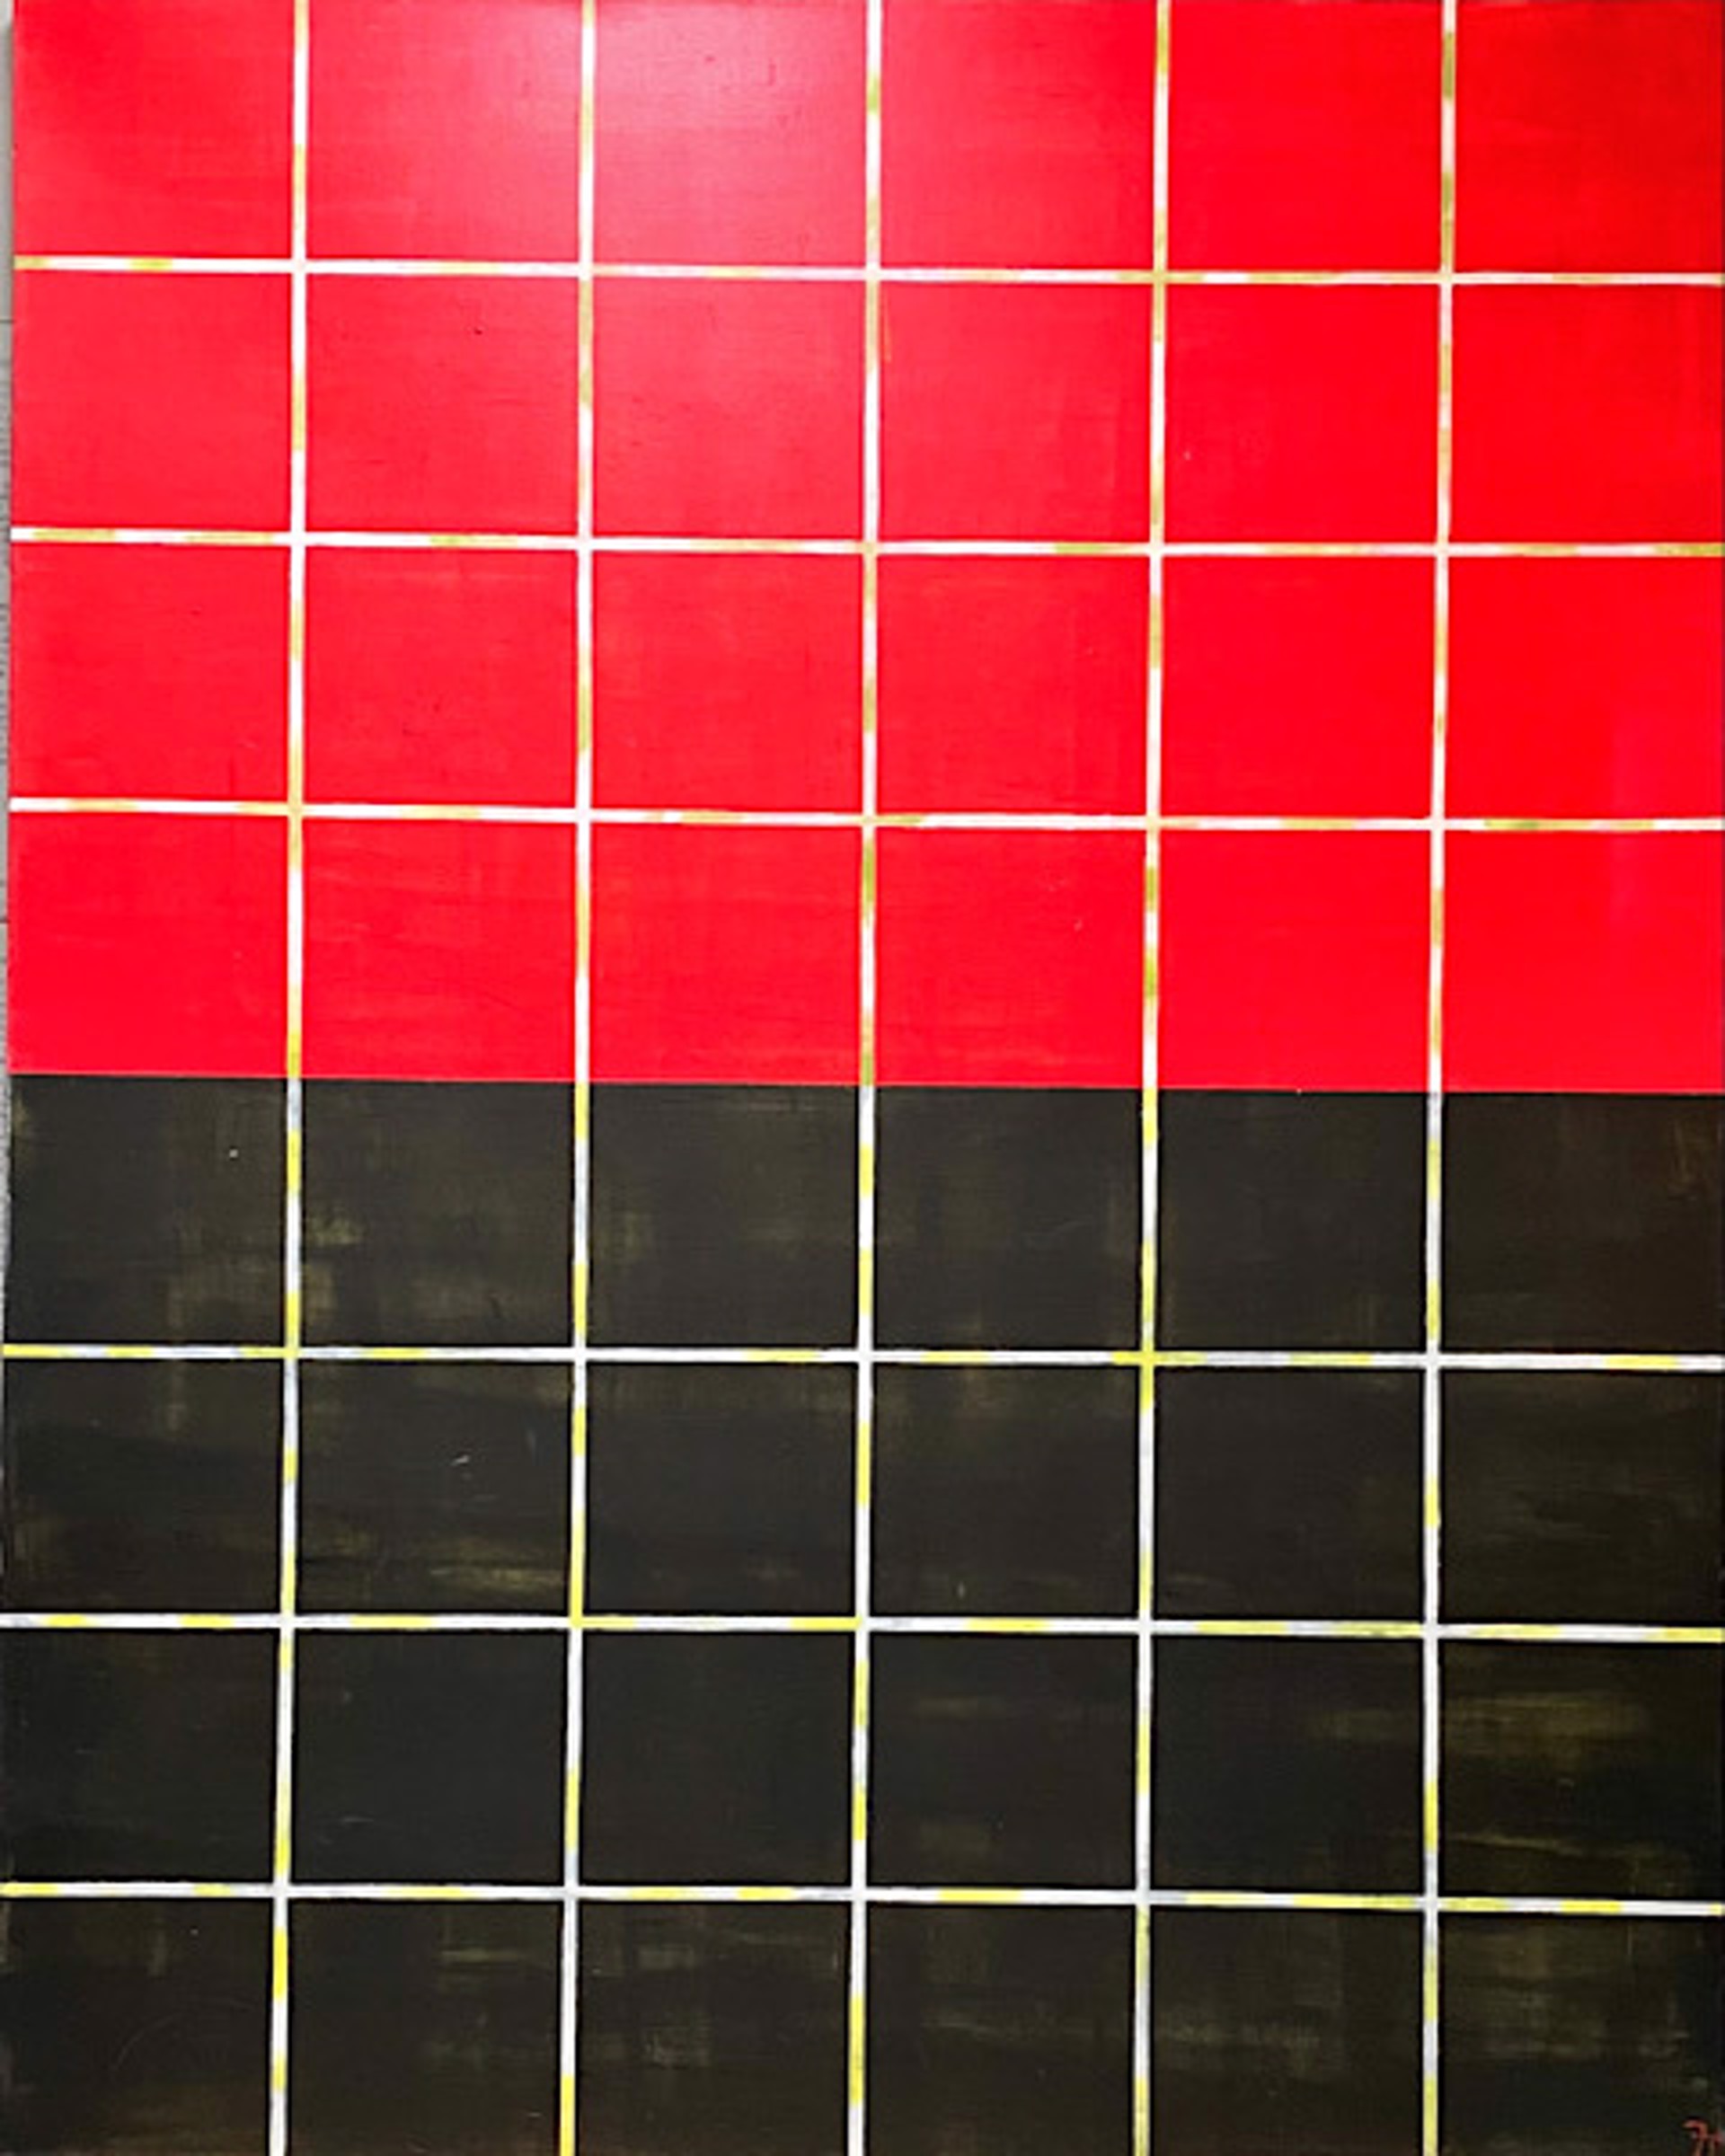 White/Black on Red by Francisco Castro Lenero